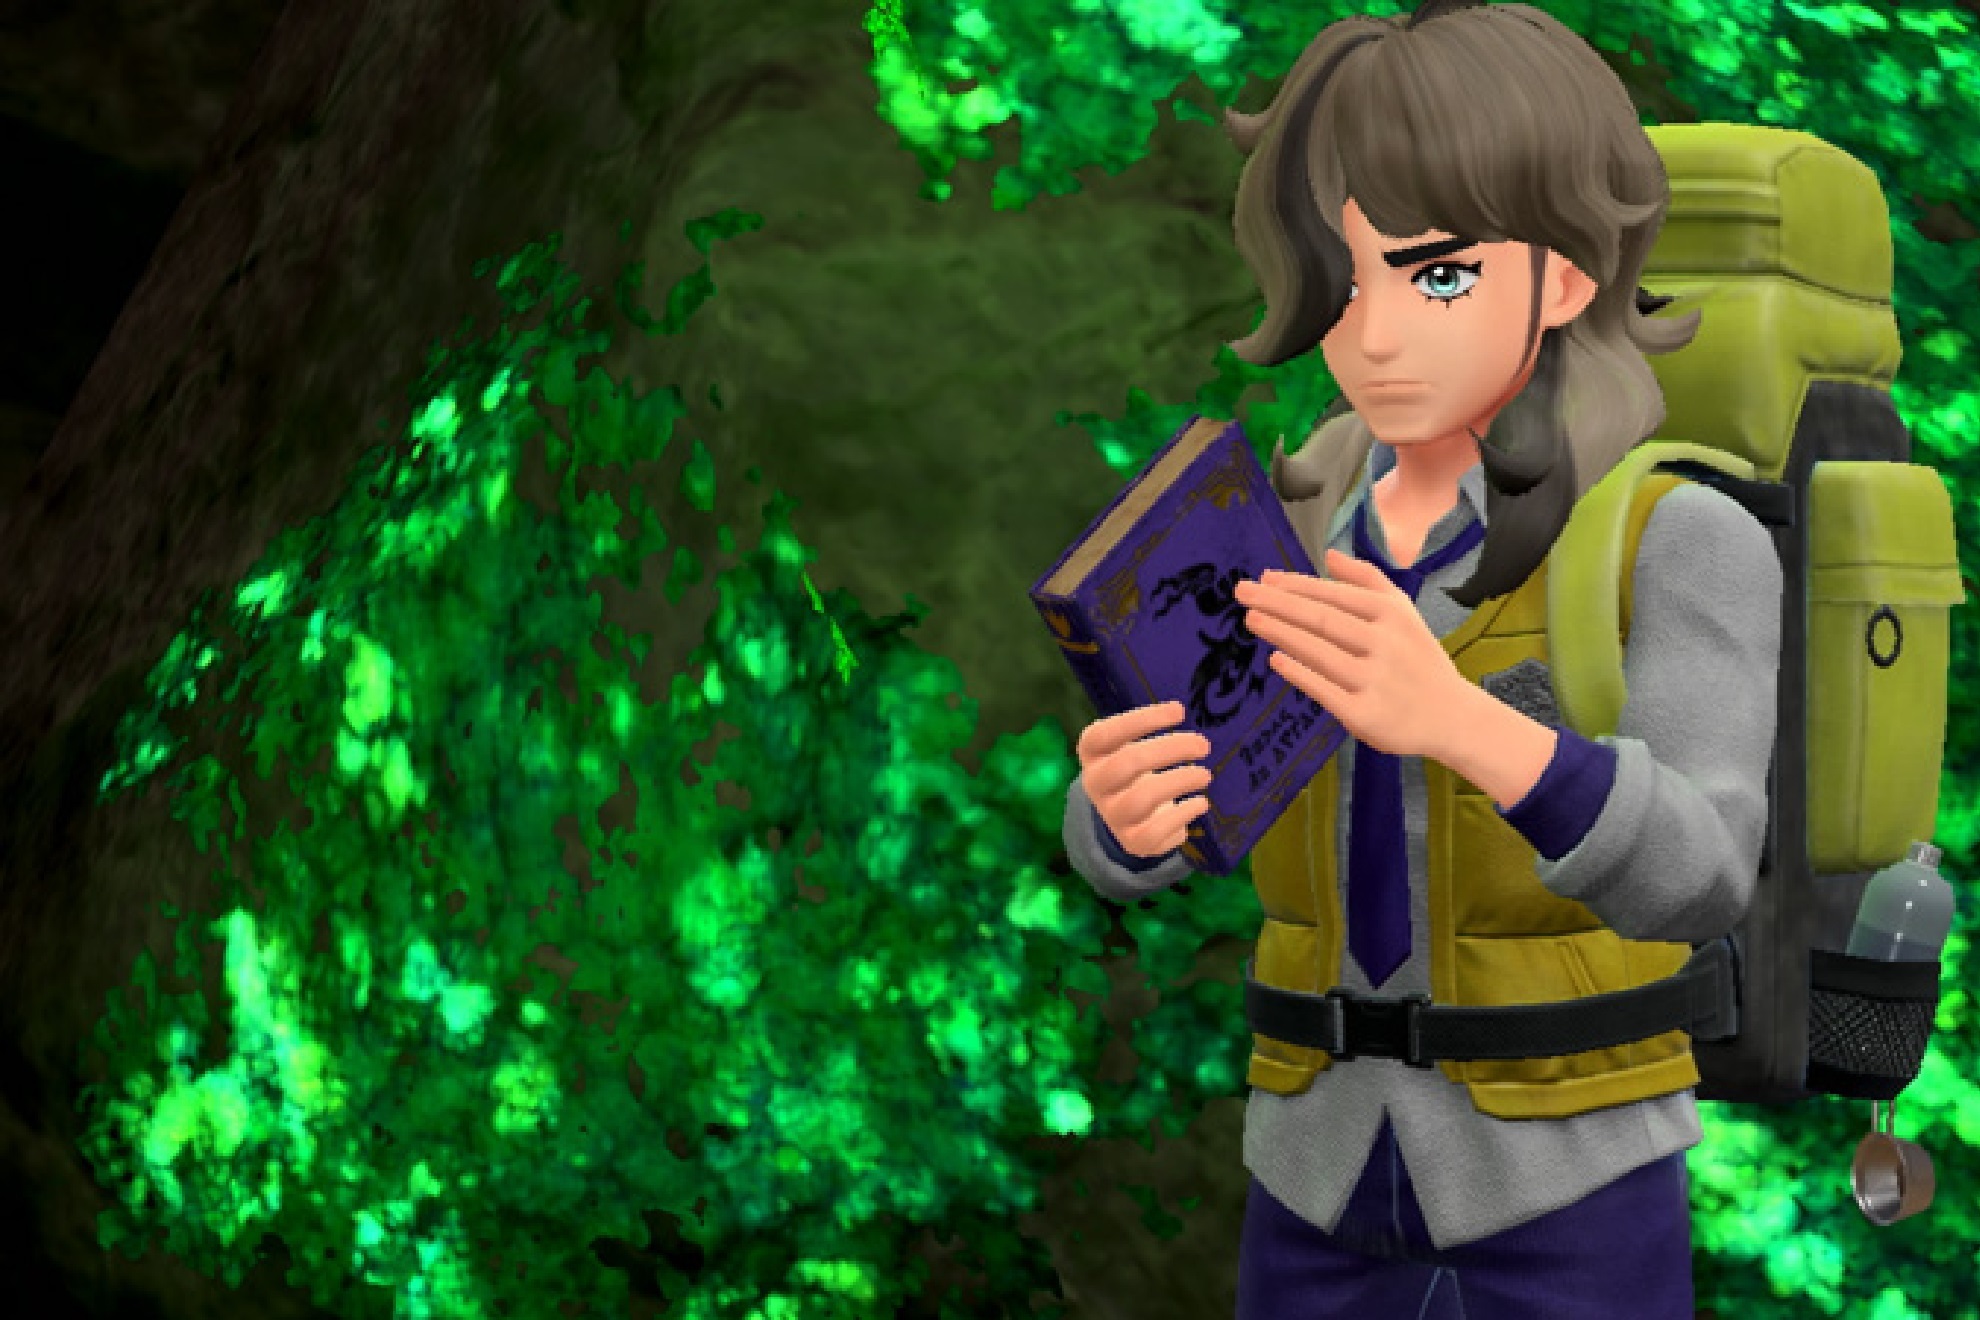 Cómo capturar Pokémon Shiny en Pokémon Escarlata y Púrpura